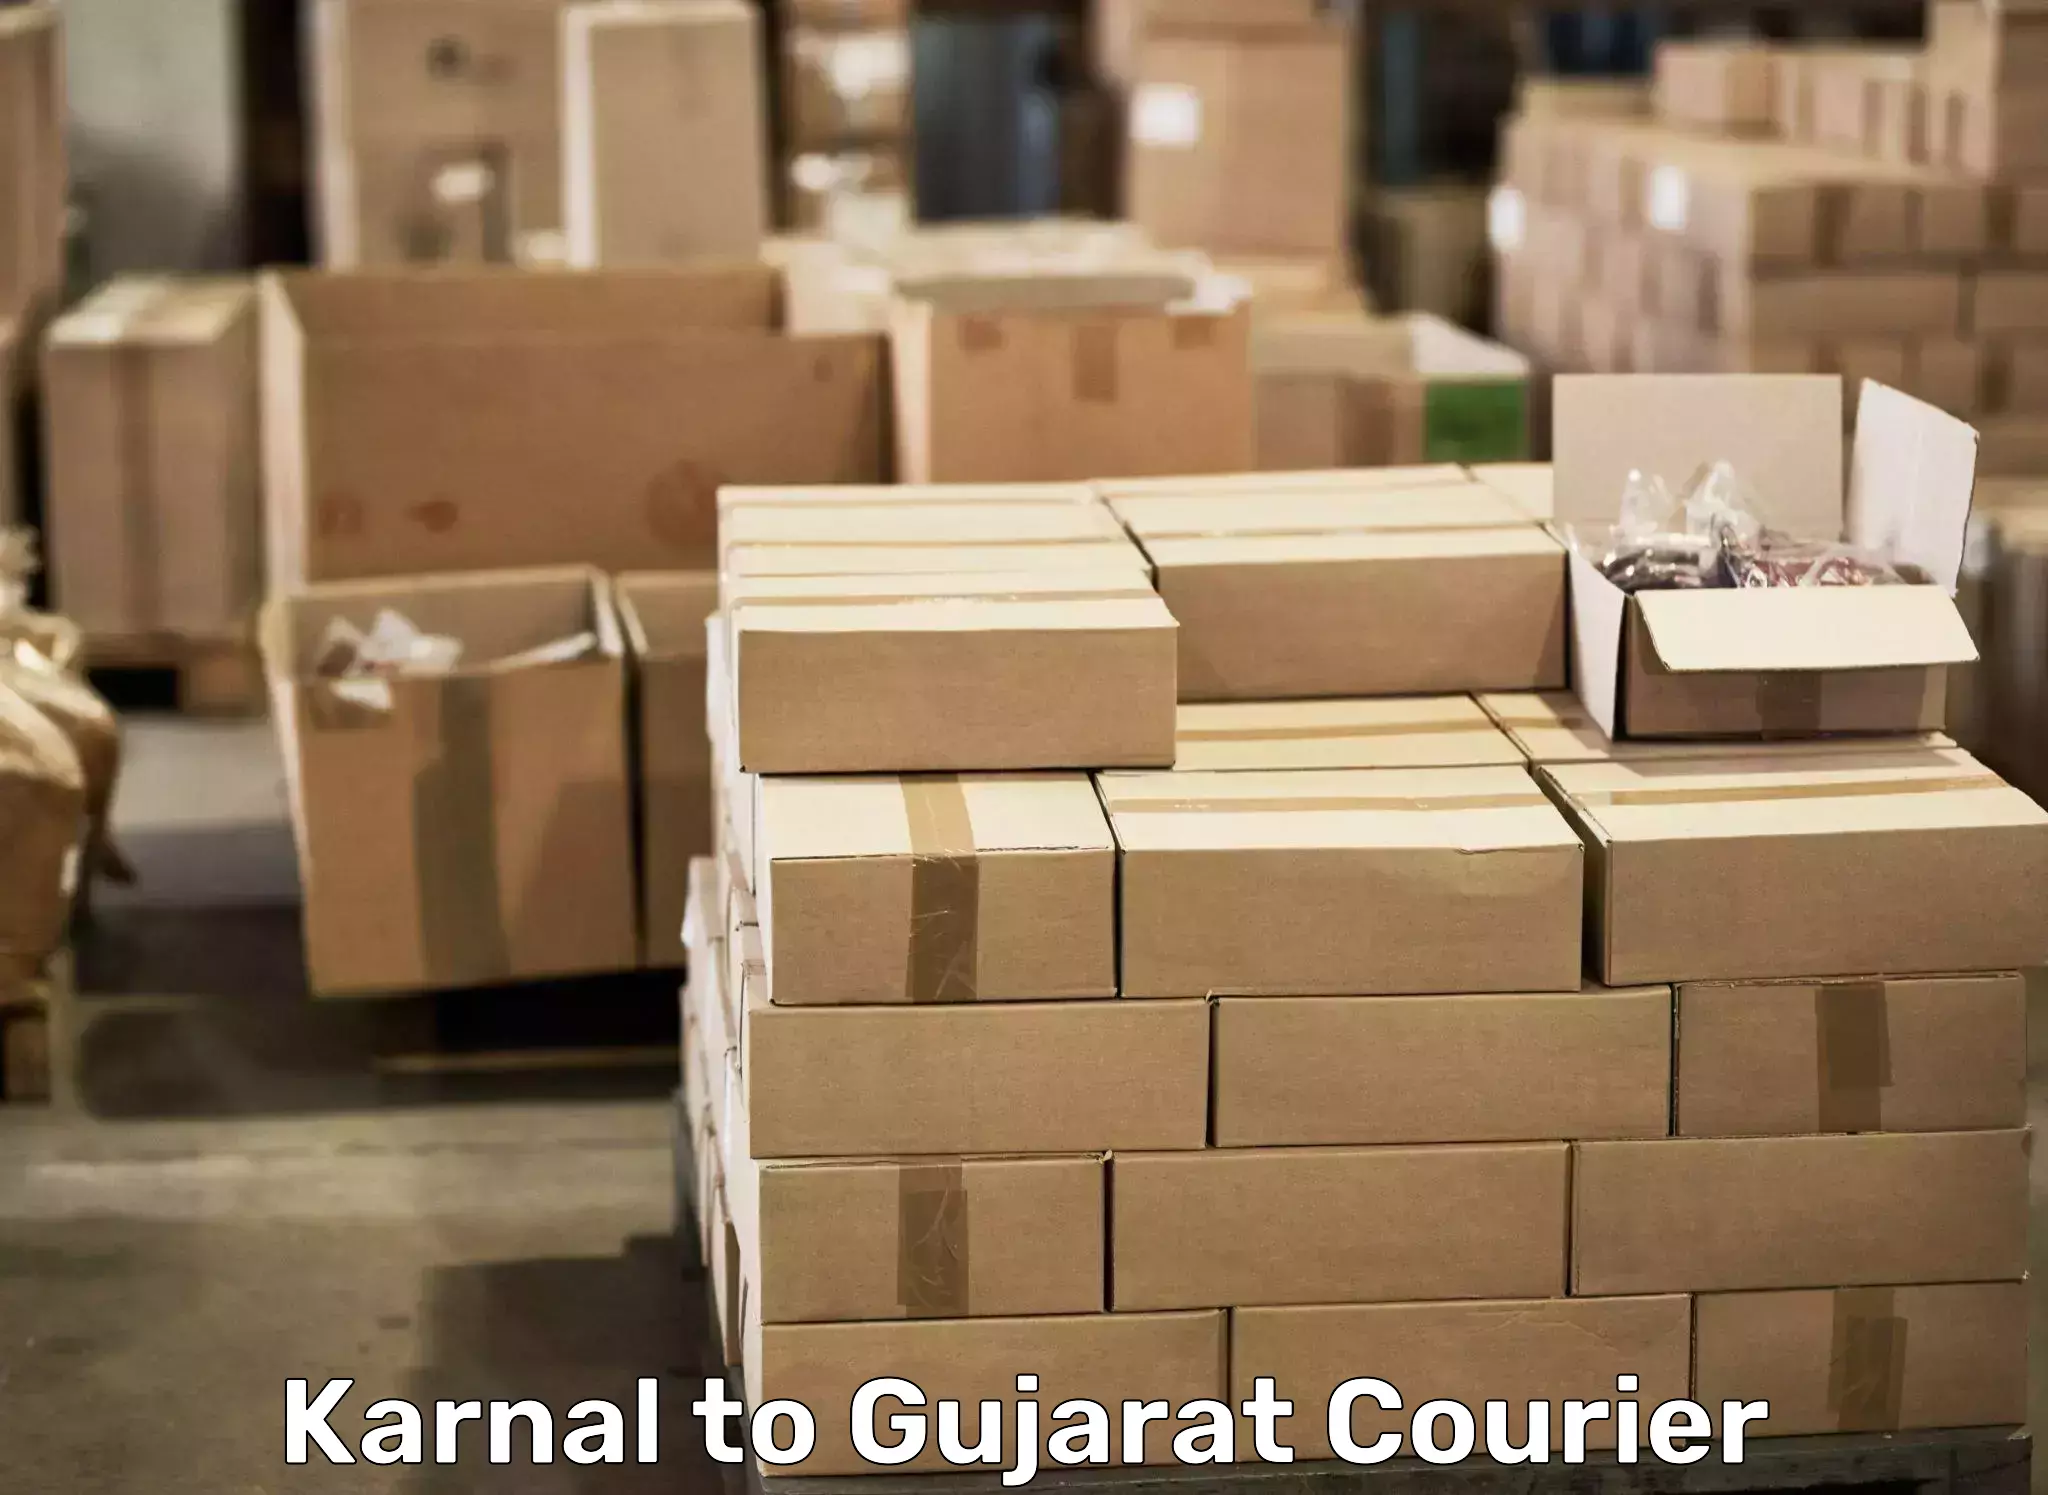 Professional moving company Karnal to Mundra